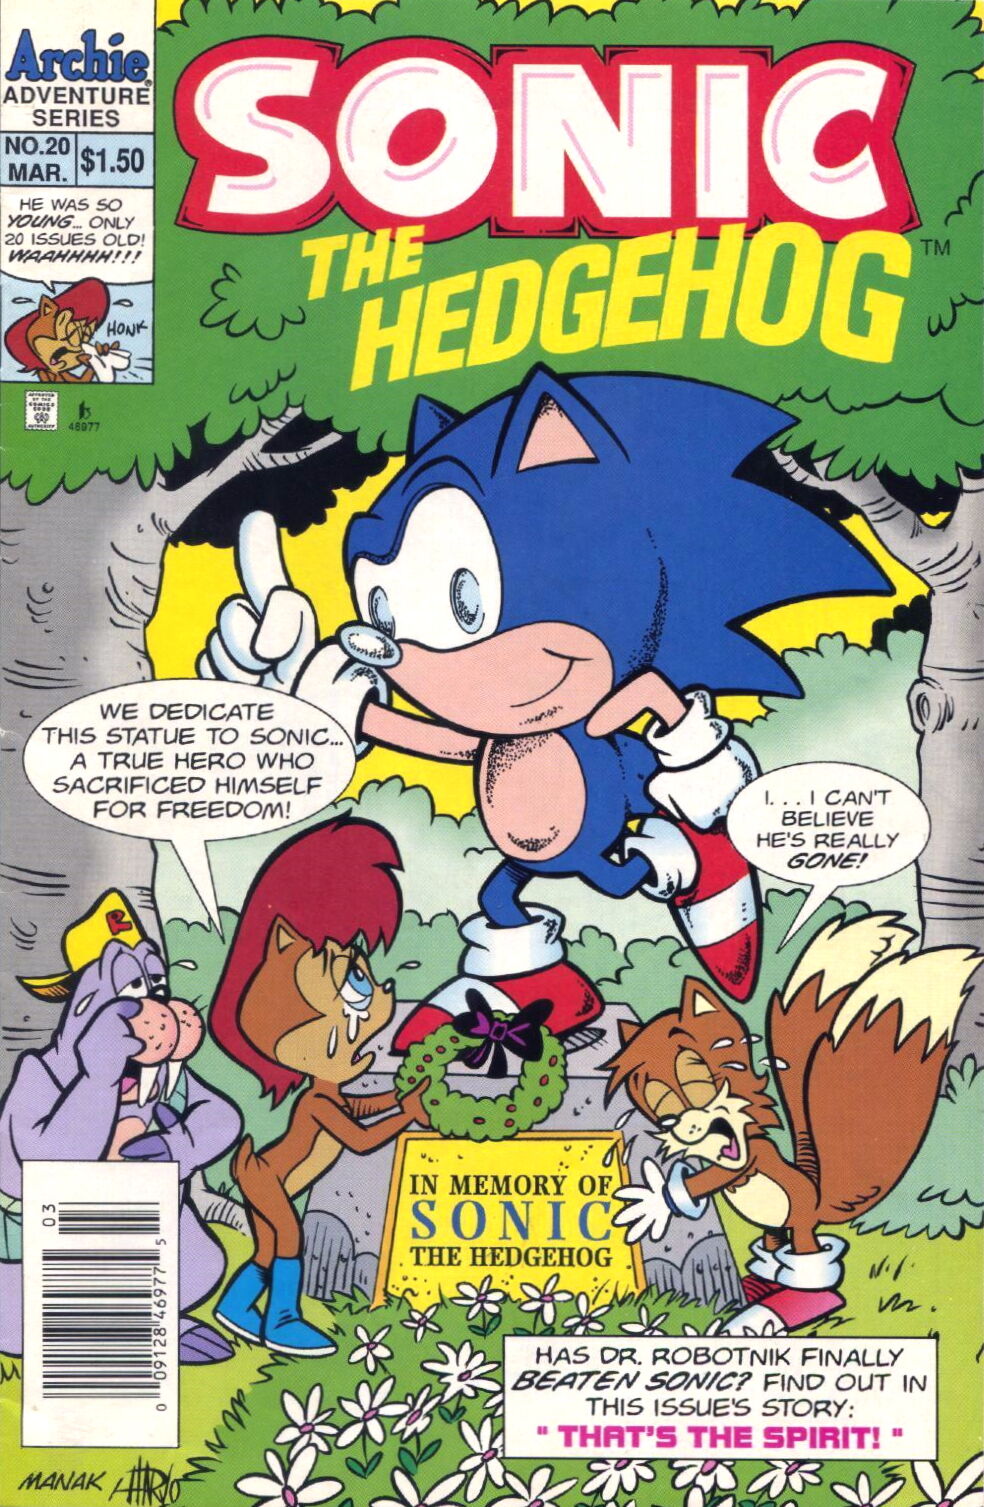 Image - 835973], Archie Sonic Comics